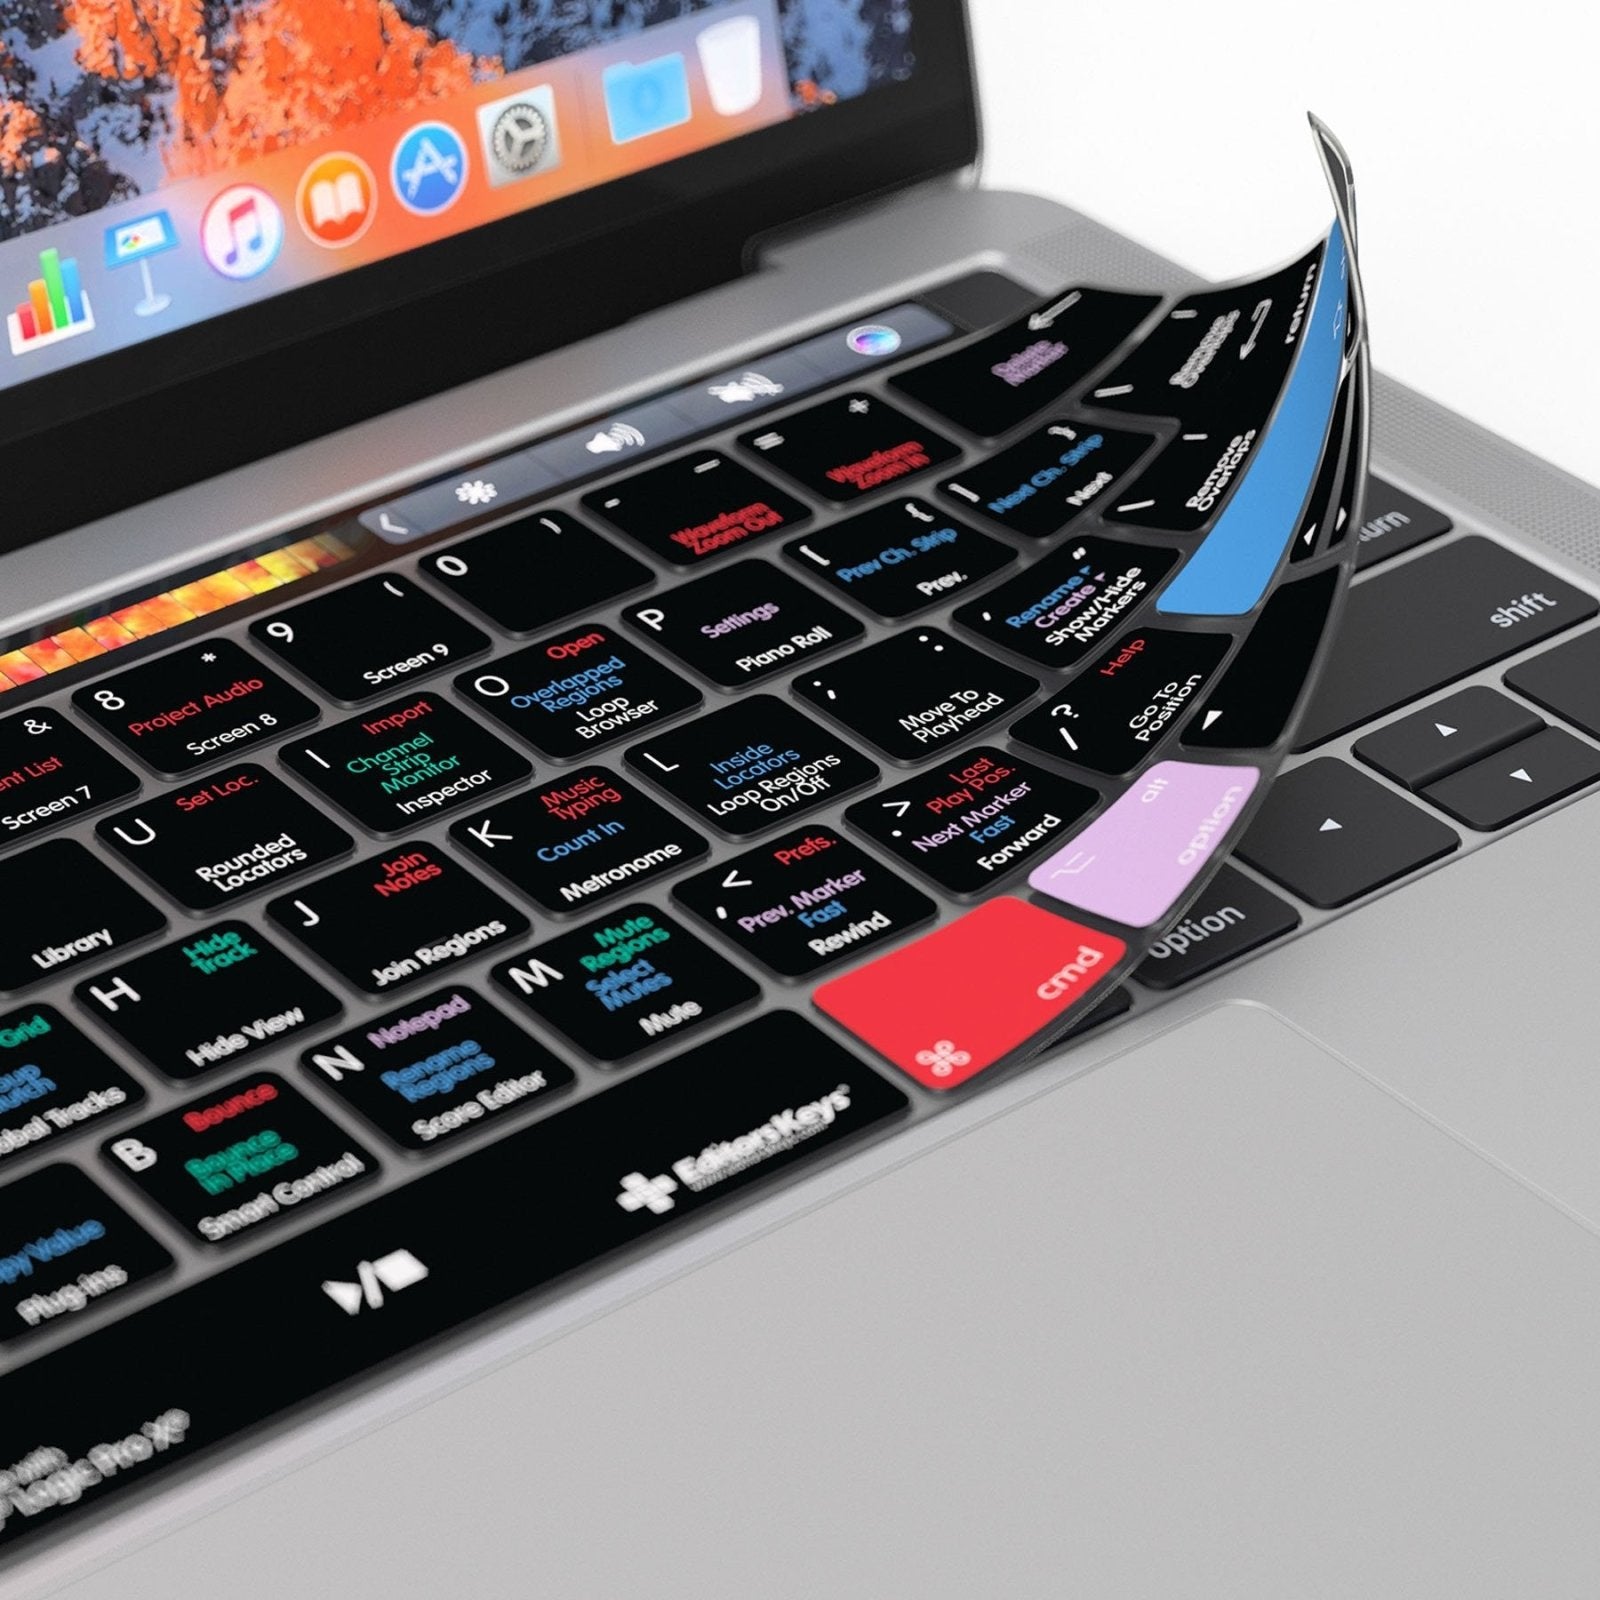 Apple Logic Pro Keyboard Covers for MacBook and iMac - Editors Keys